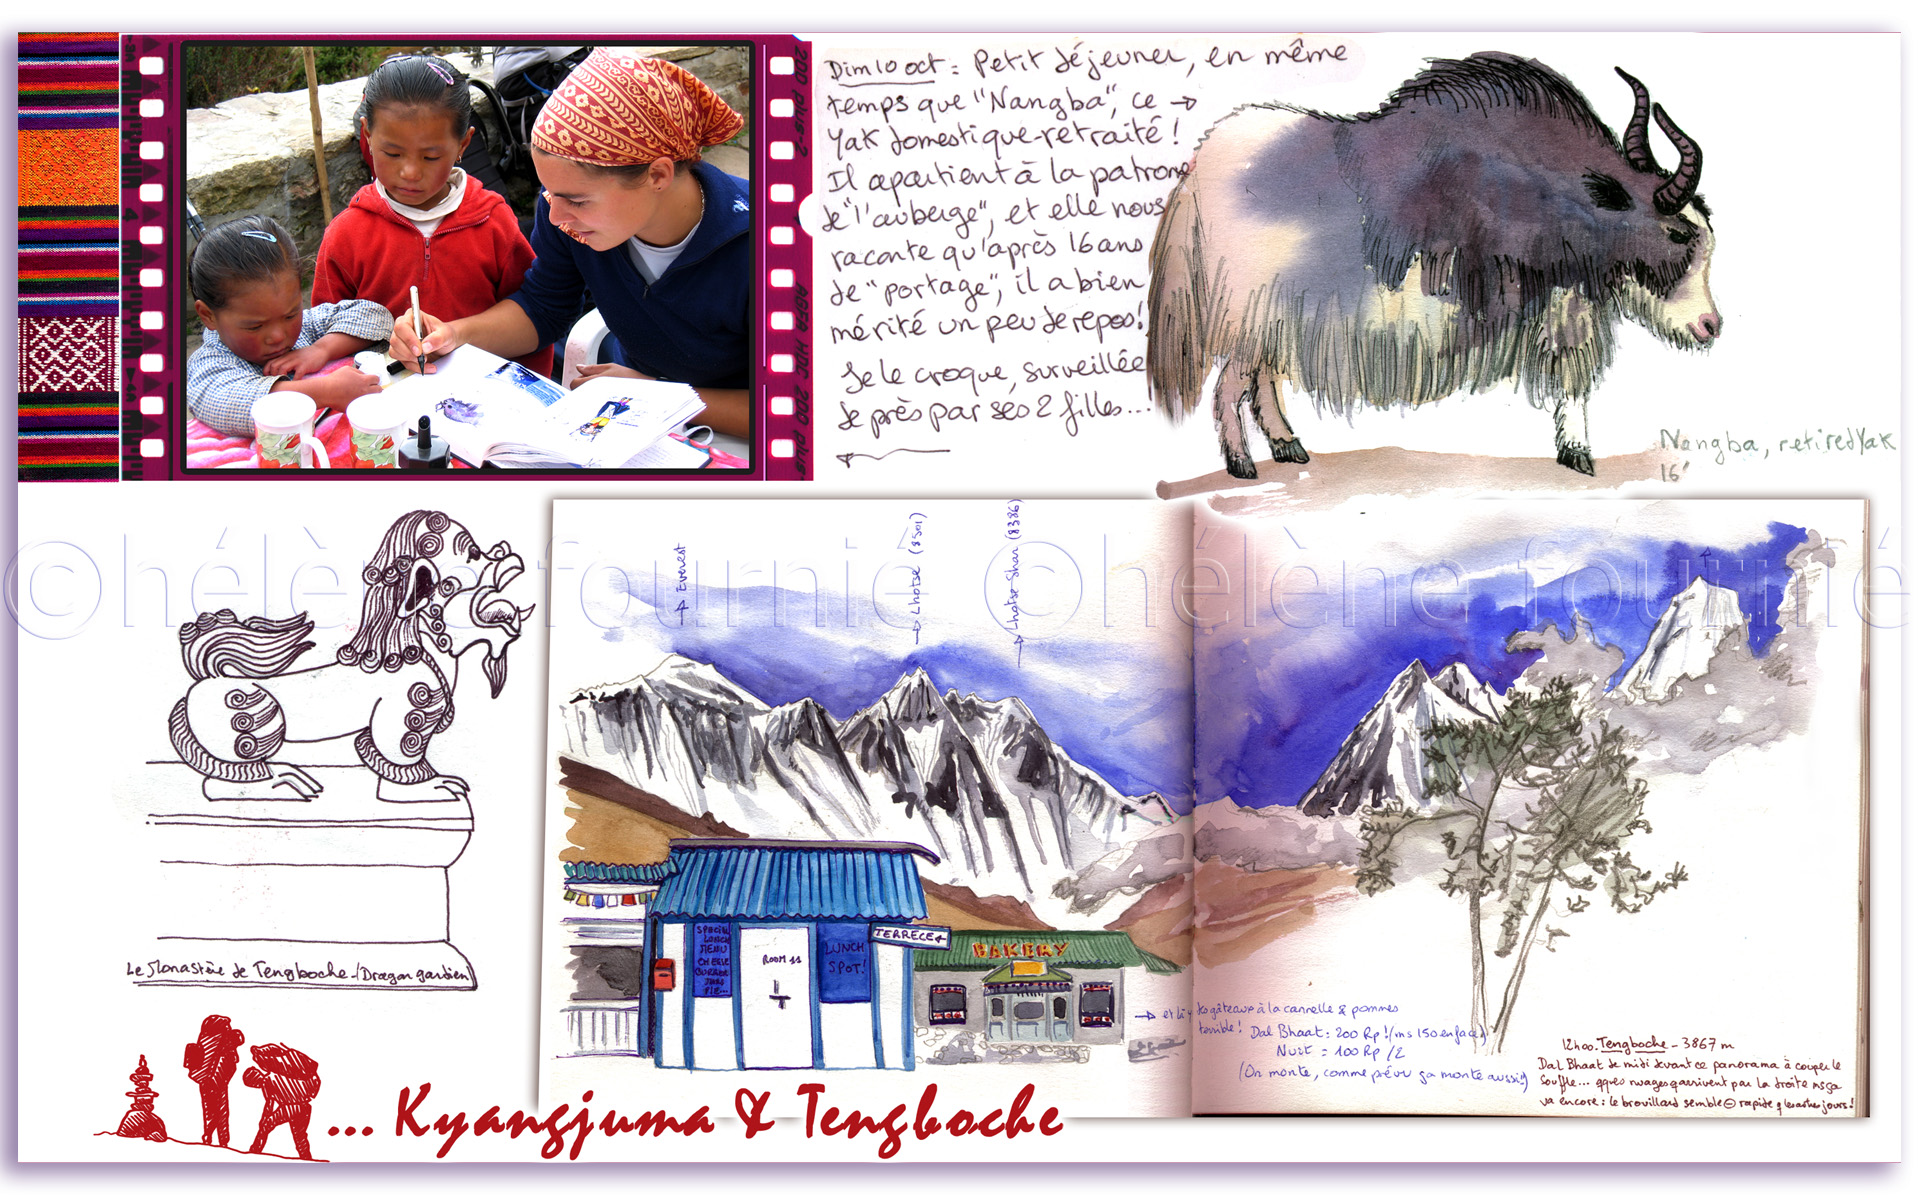 Travel diary in Nepal